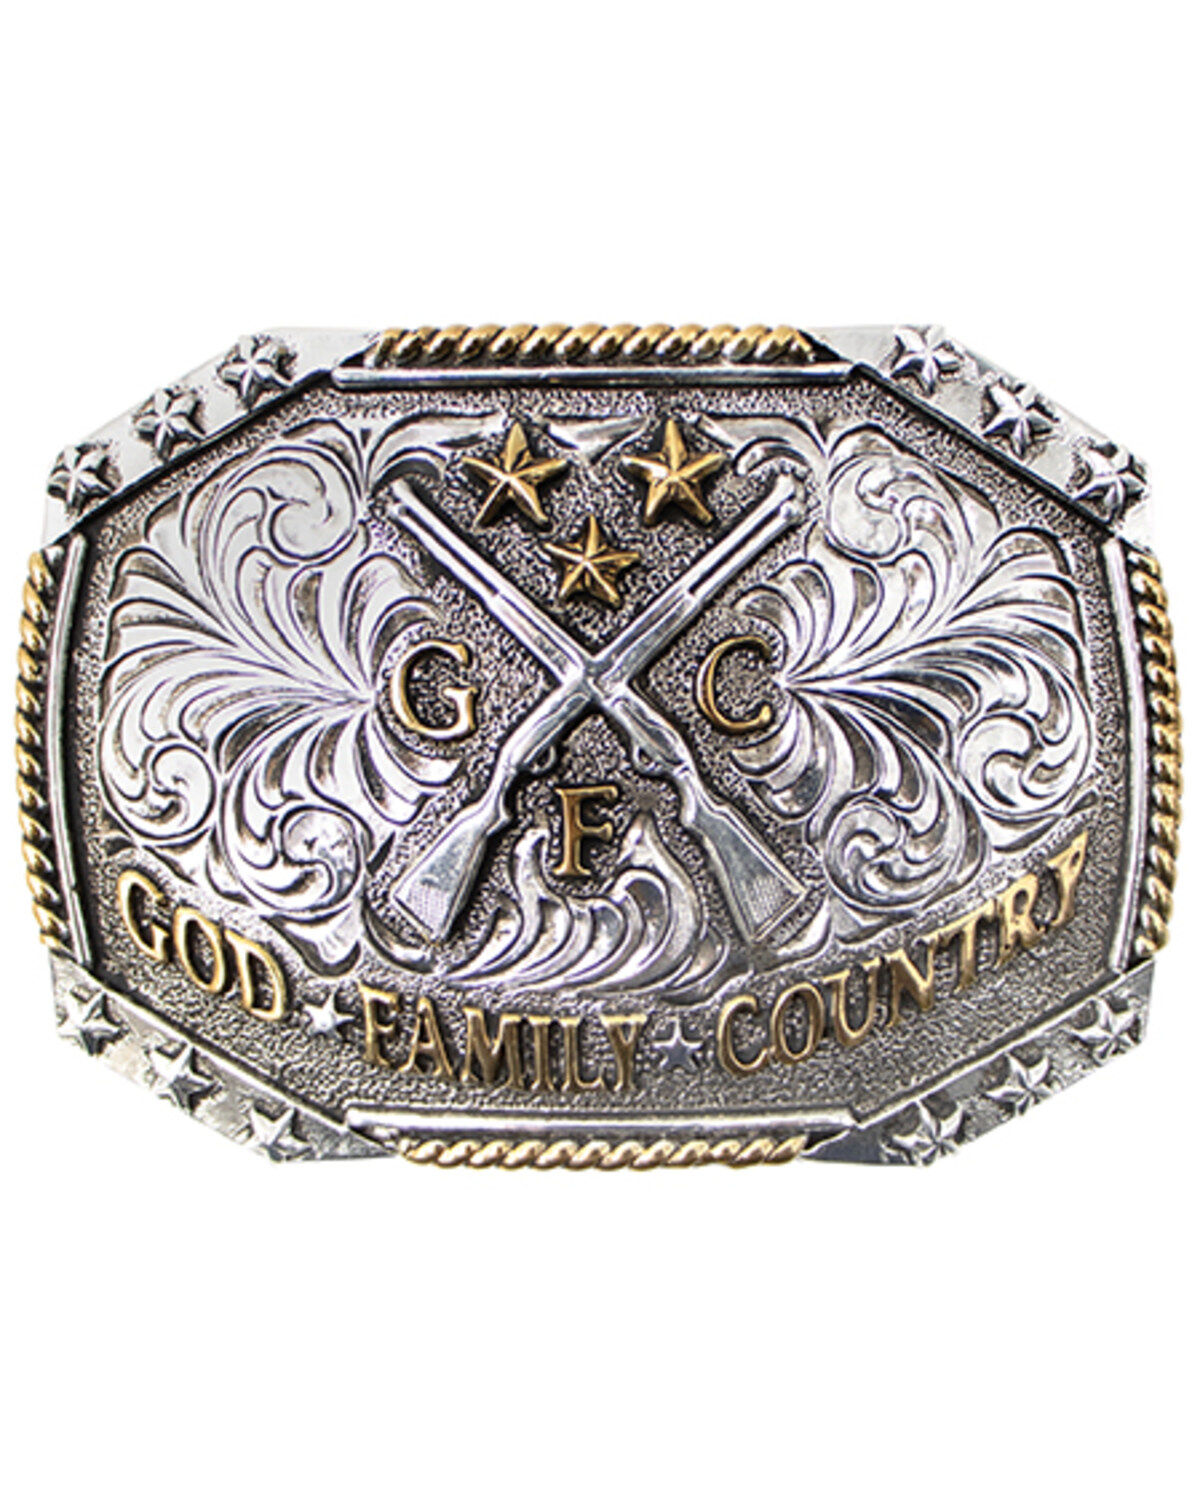 Vintage Crumine Texas Ranger belt buckle